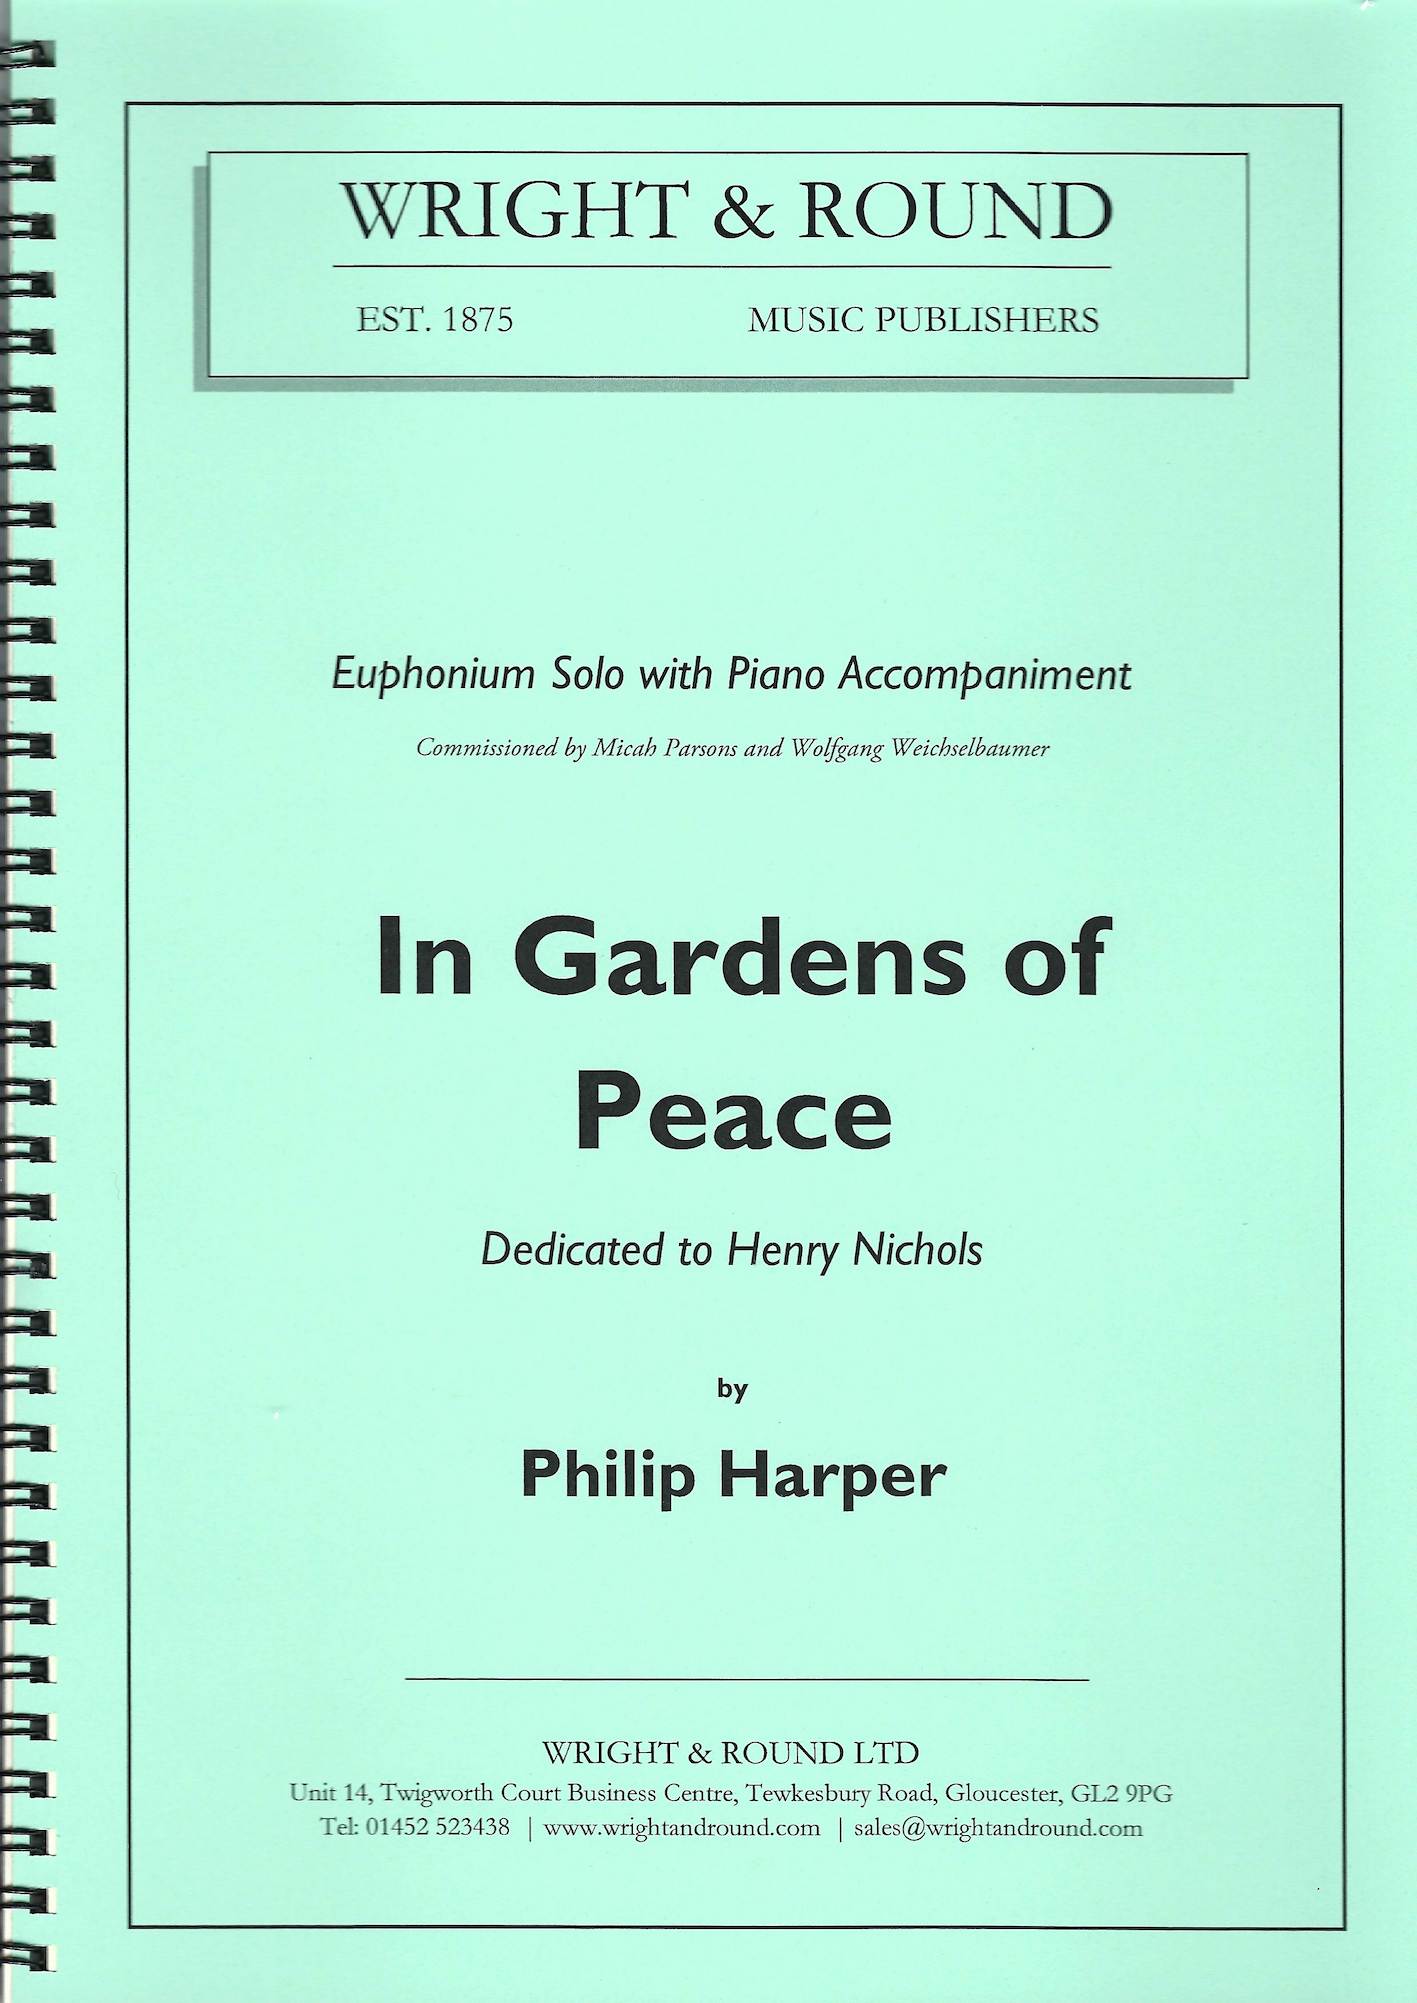 In Gardens of Peace - Philip Harper - Euphonium and Piano